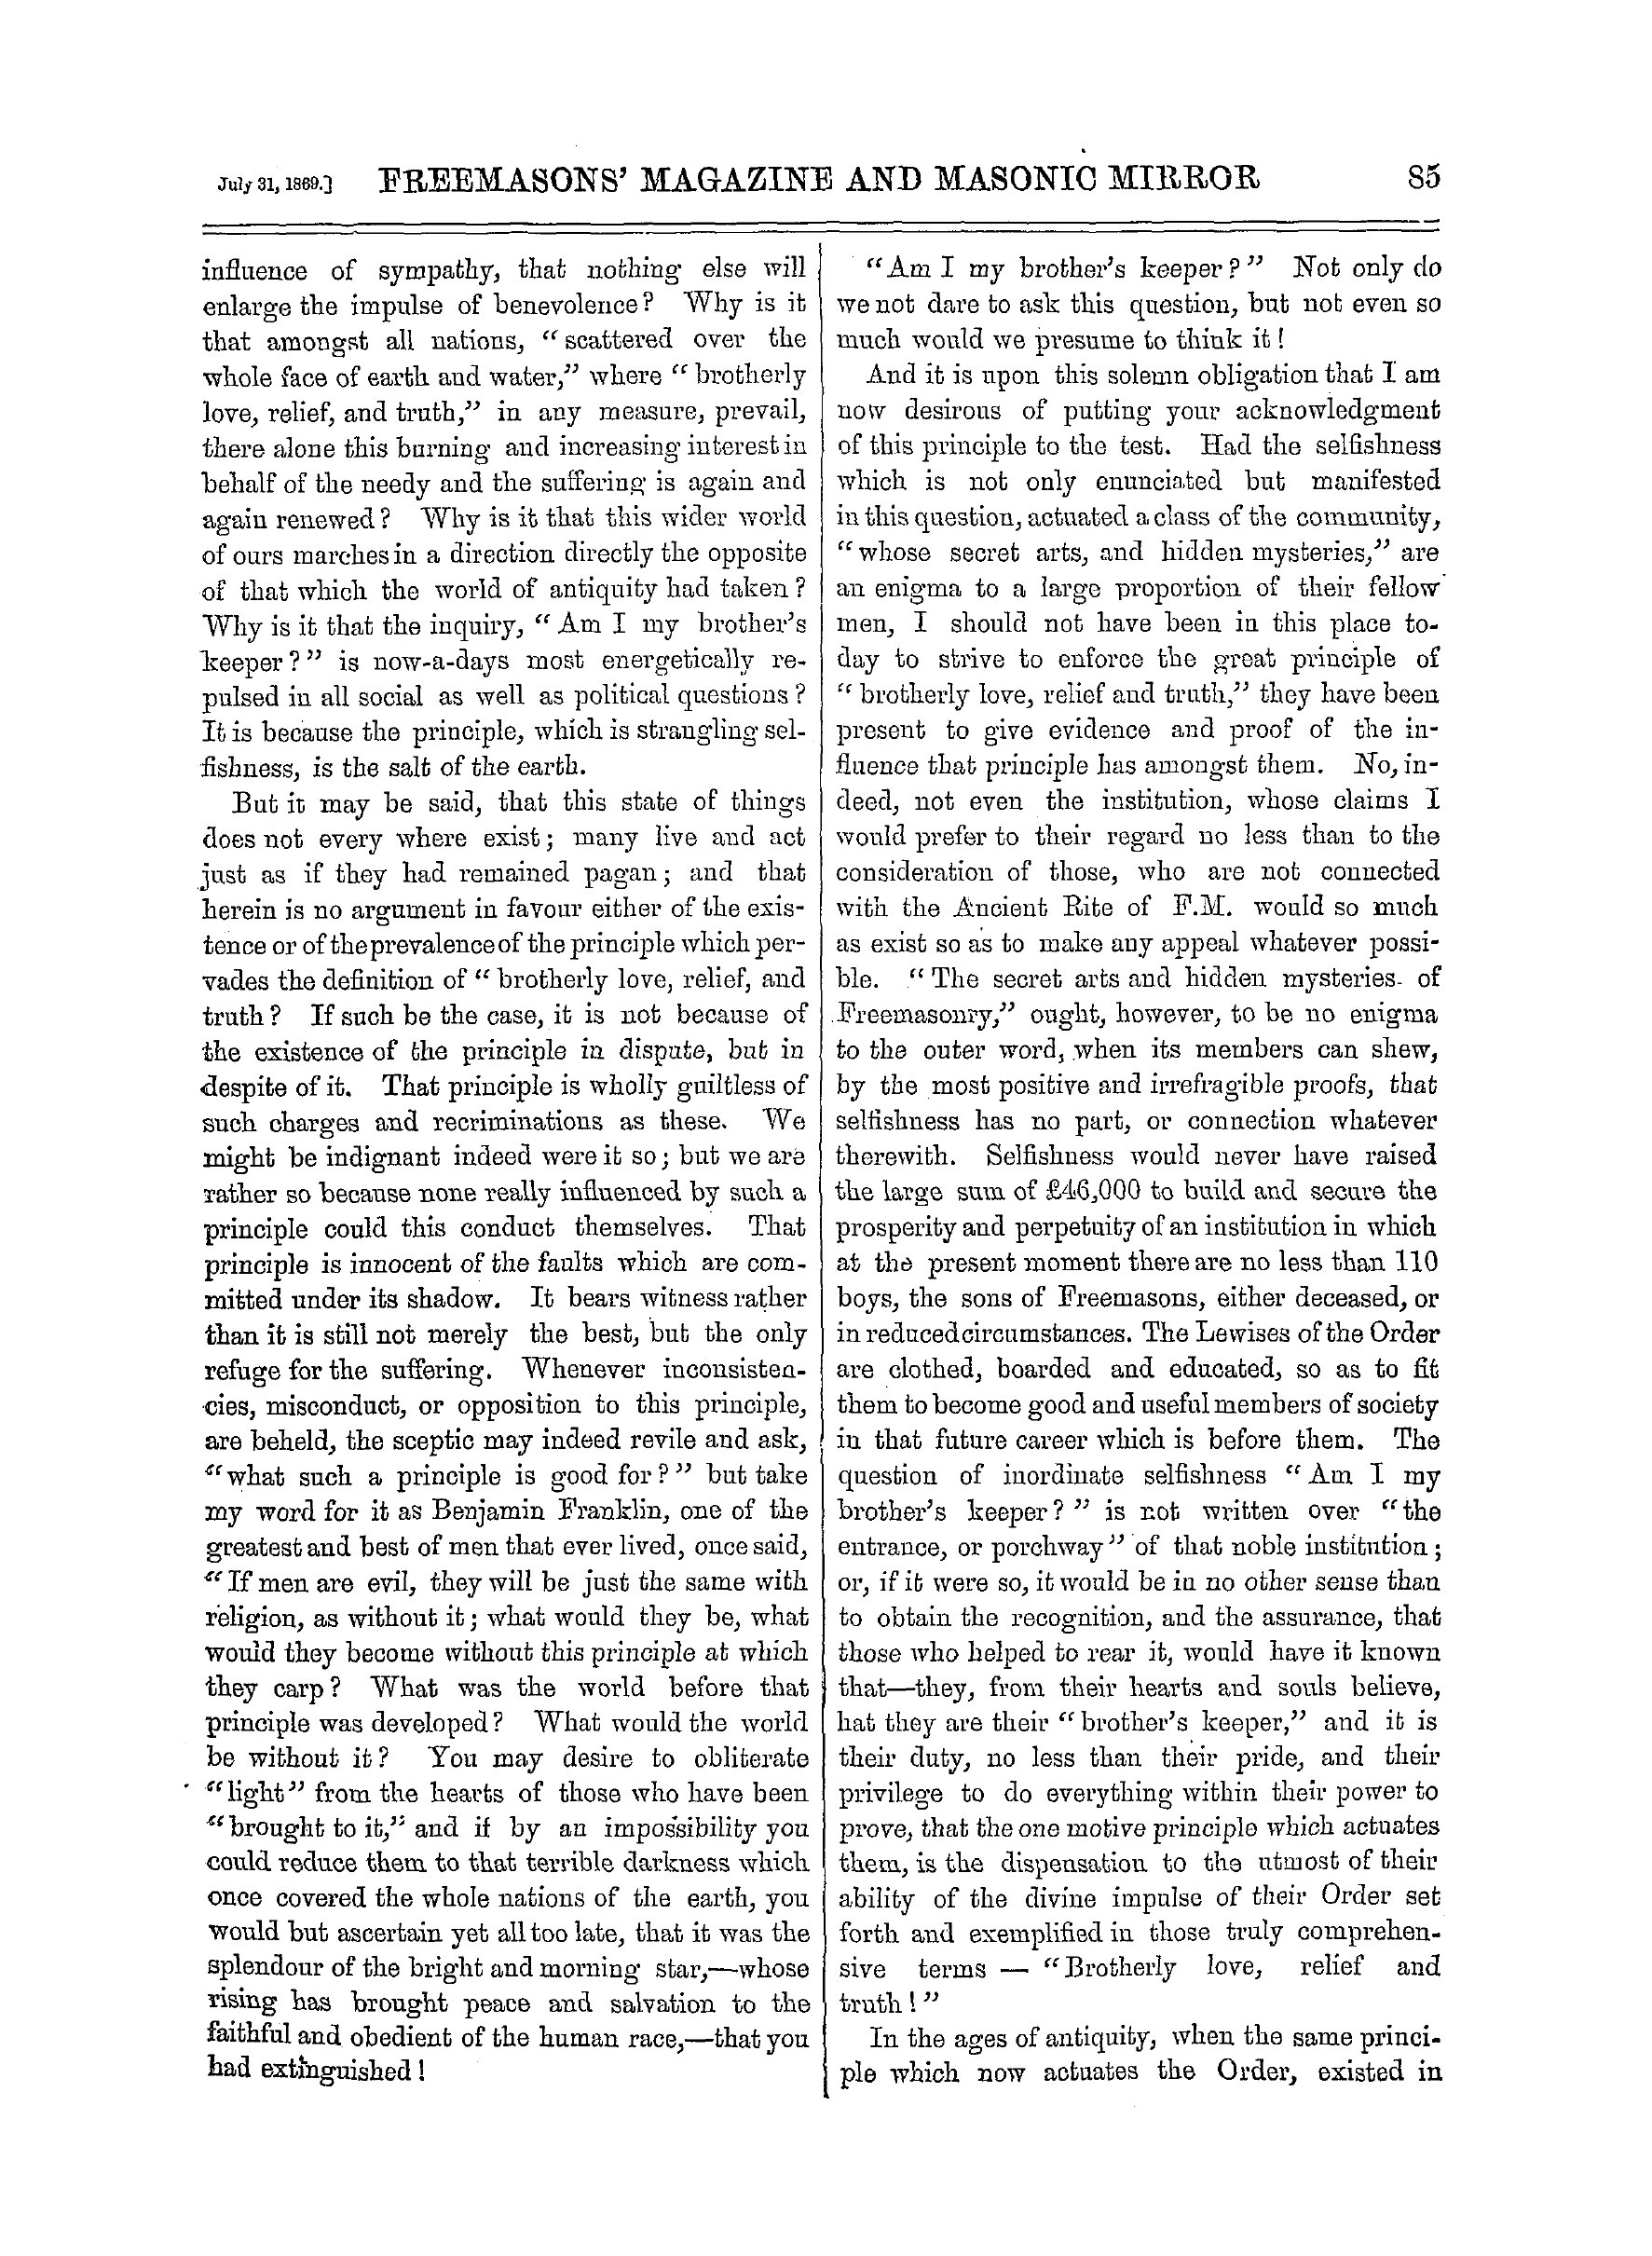 The Freemasons' Monthly Magazine: 1869-07-31 - Sermon,